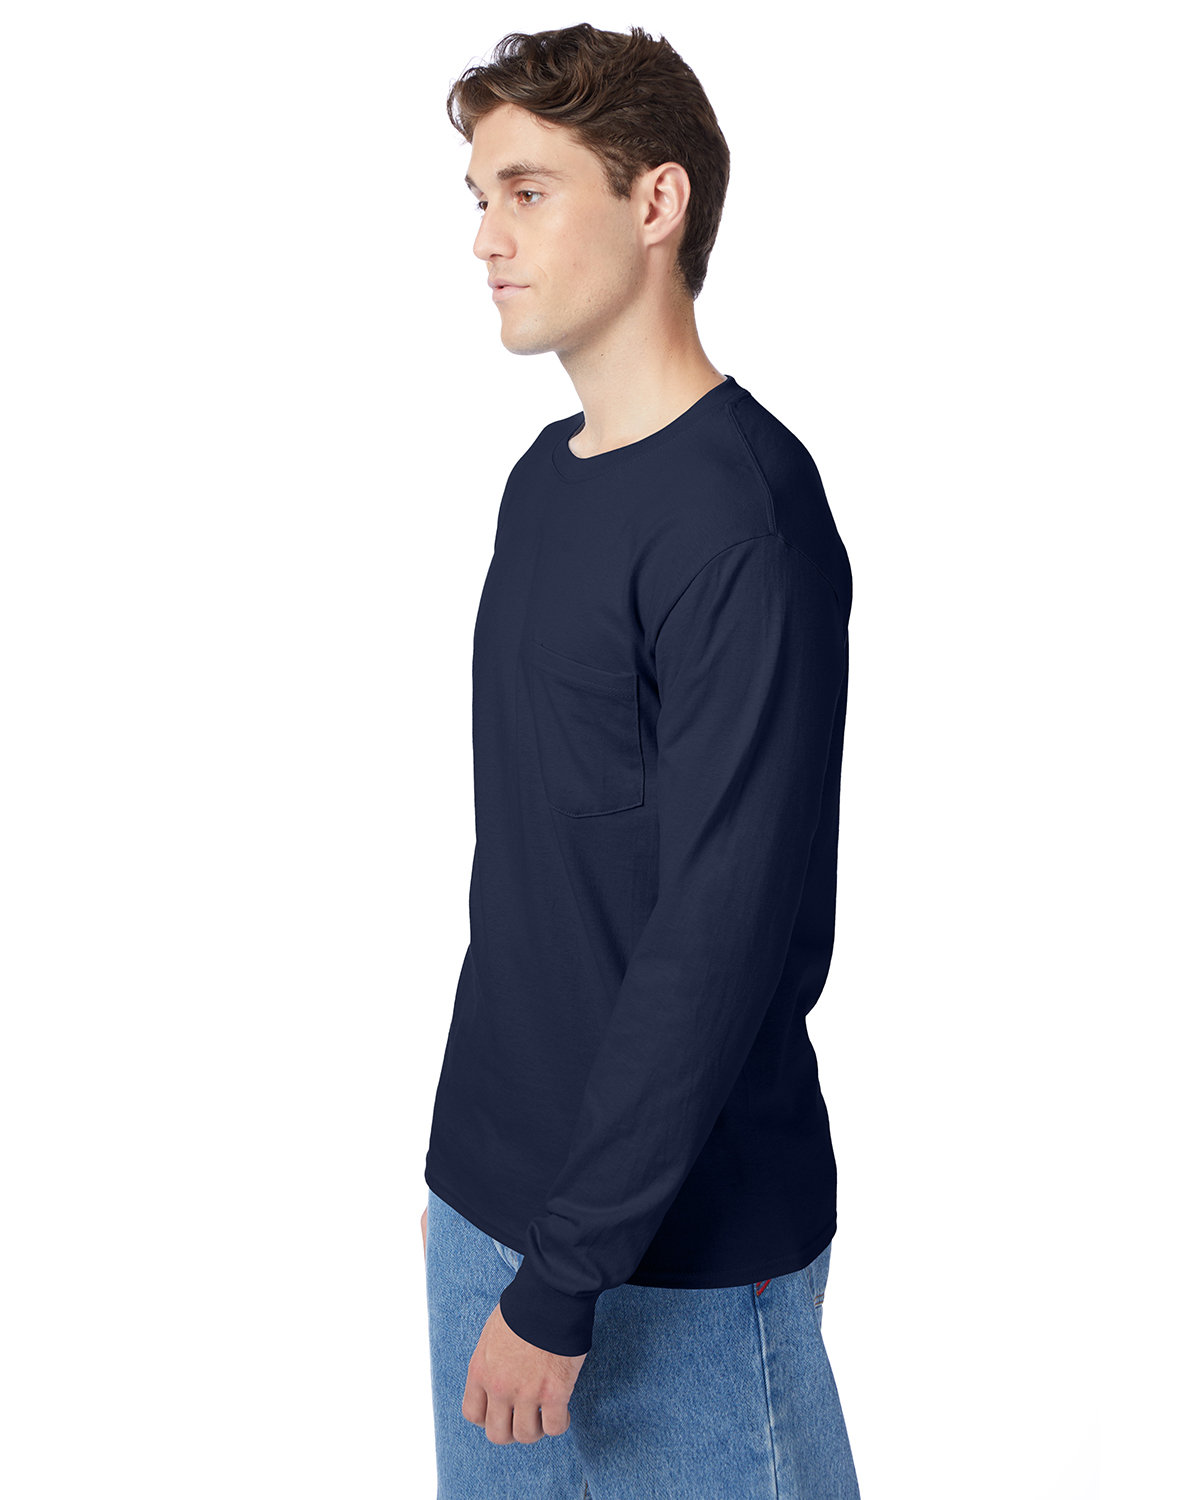 Hanes Men's Authentic-T Long-Sleeve Pocket T-Shirt NAVY 